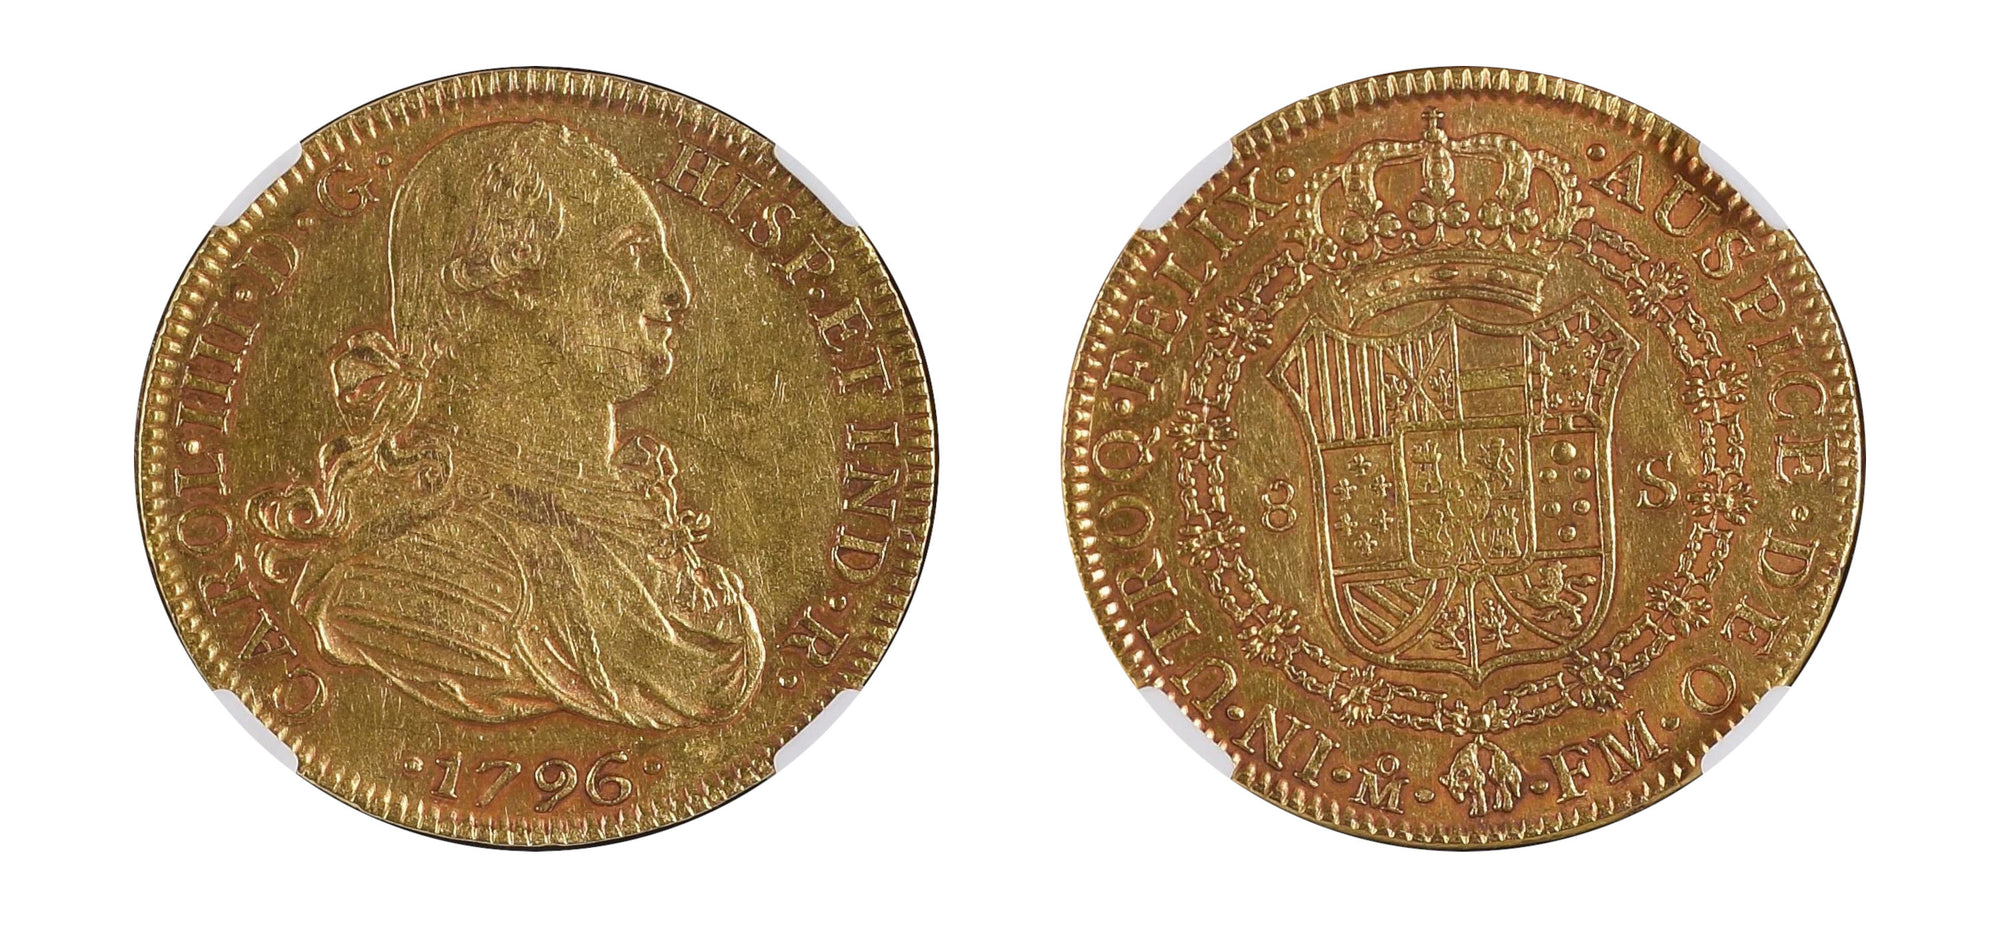 1796 Gold 8 Escudos NGC AU55 - Hard Asset Management, Inc